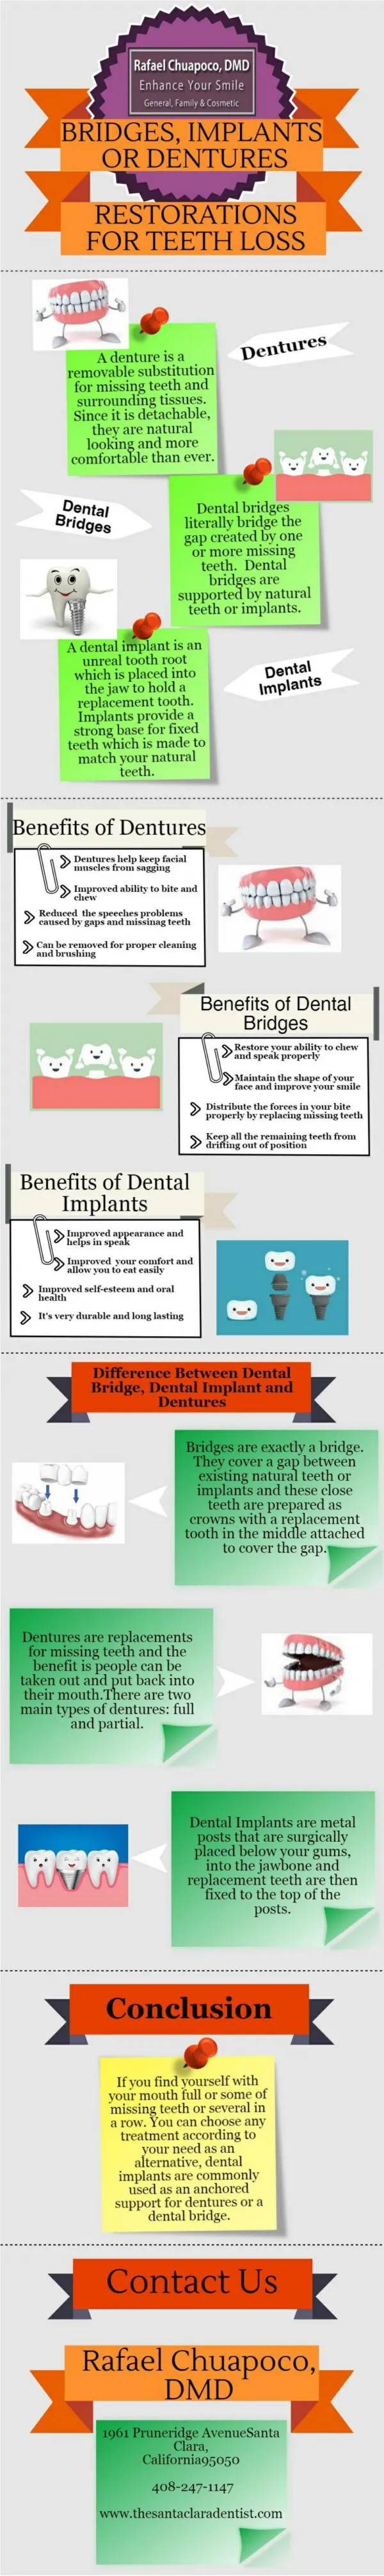 Restorations for Missing Teeth – Implants, Dentures & Bridges